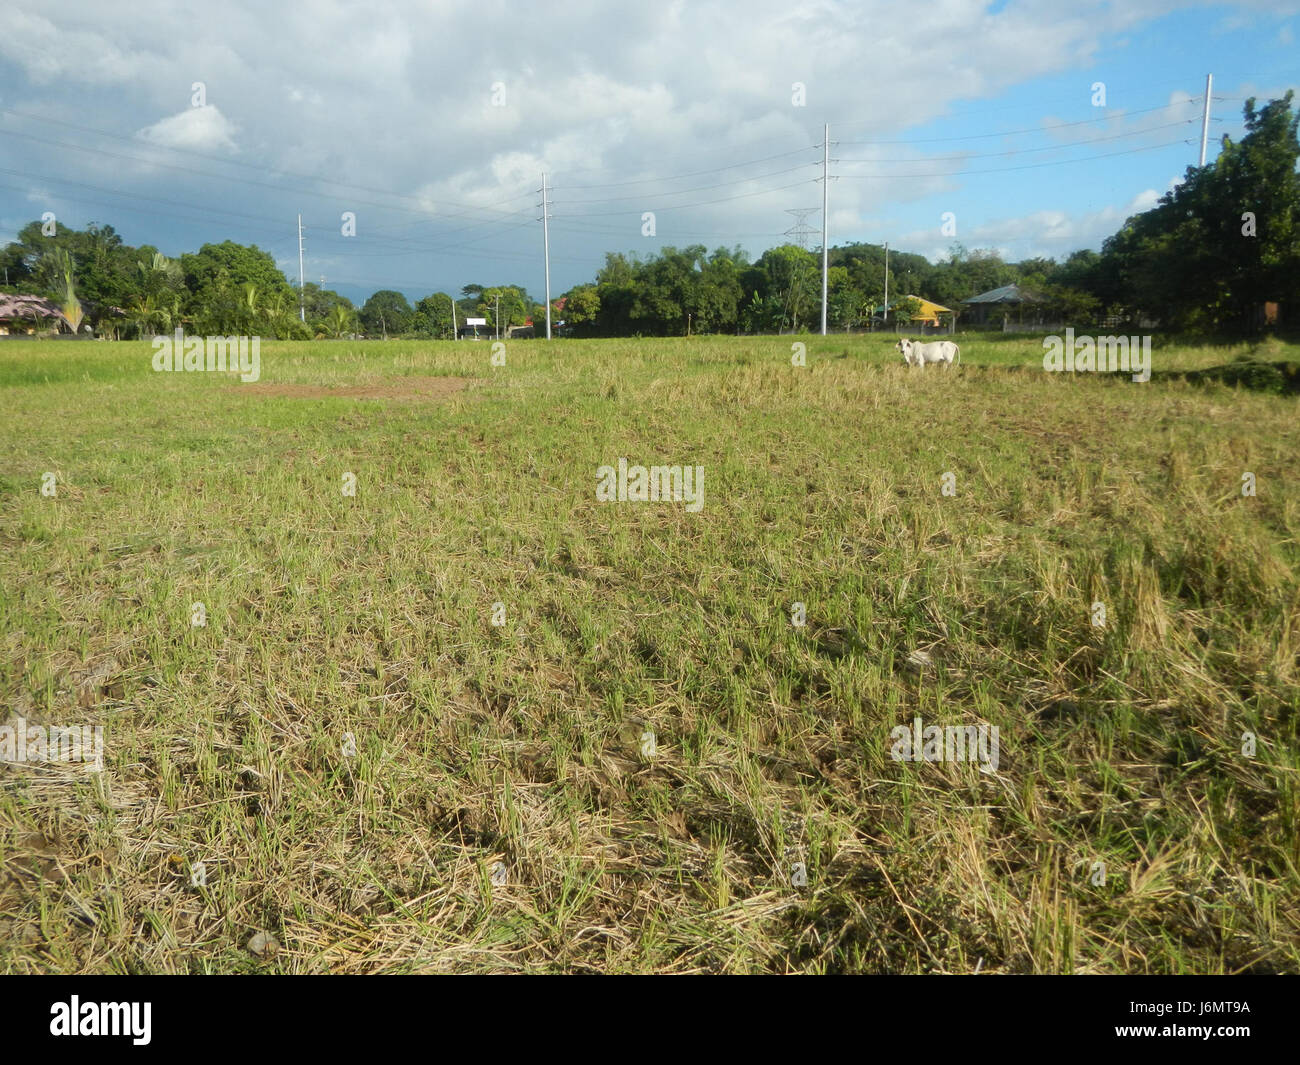 06550 Paddy fields trees grasslands Diliman I Salapungan San Rafael Bulacan villages  03 Stock Photo